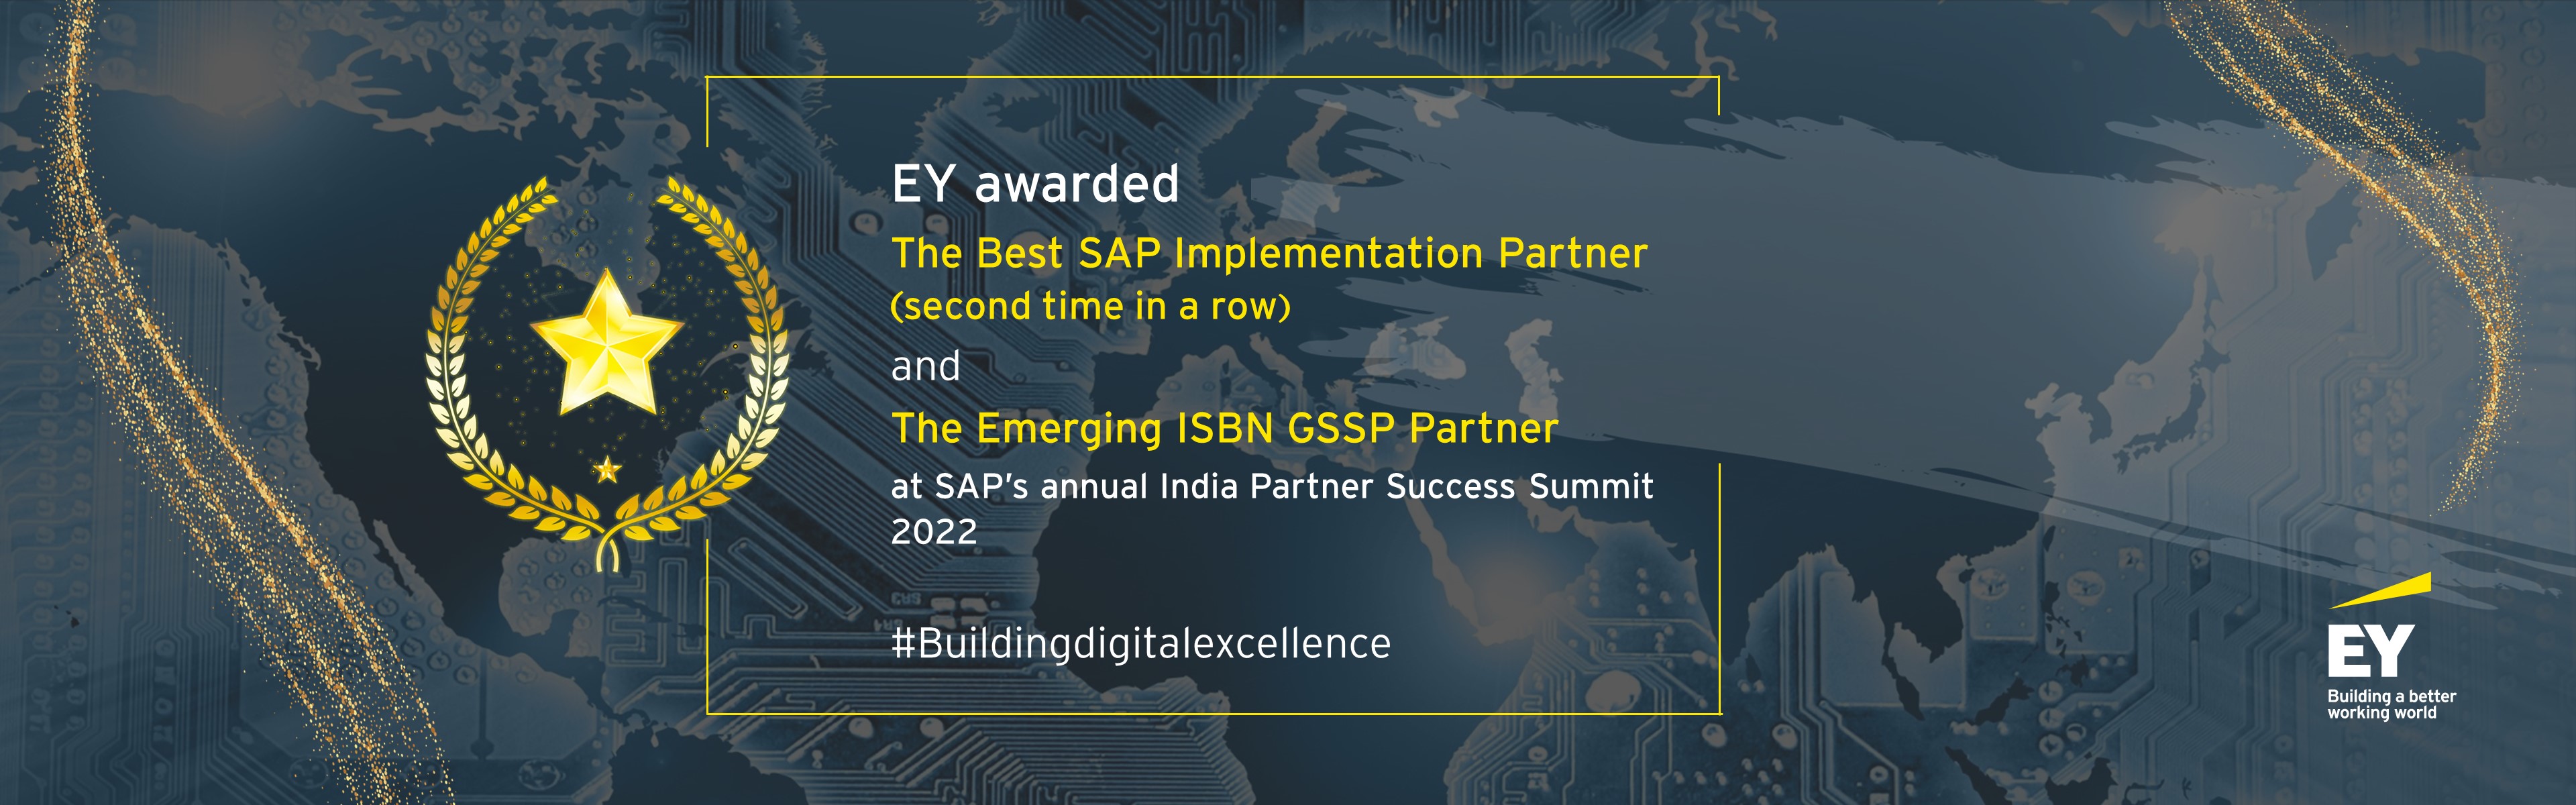 EY awarded The Best SAP Implementation Partner